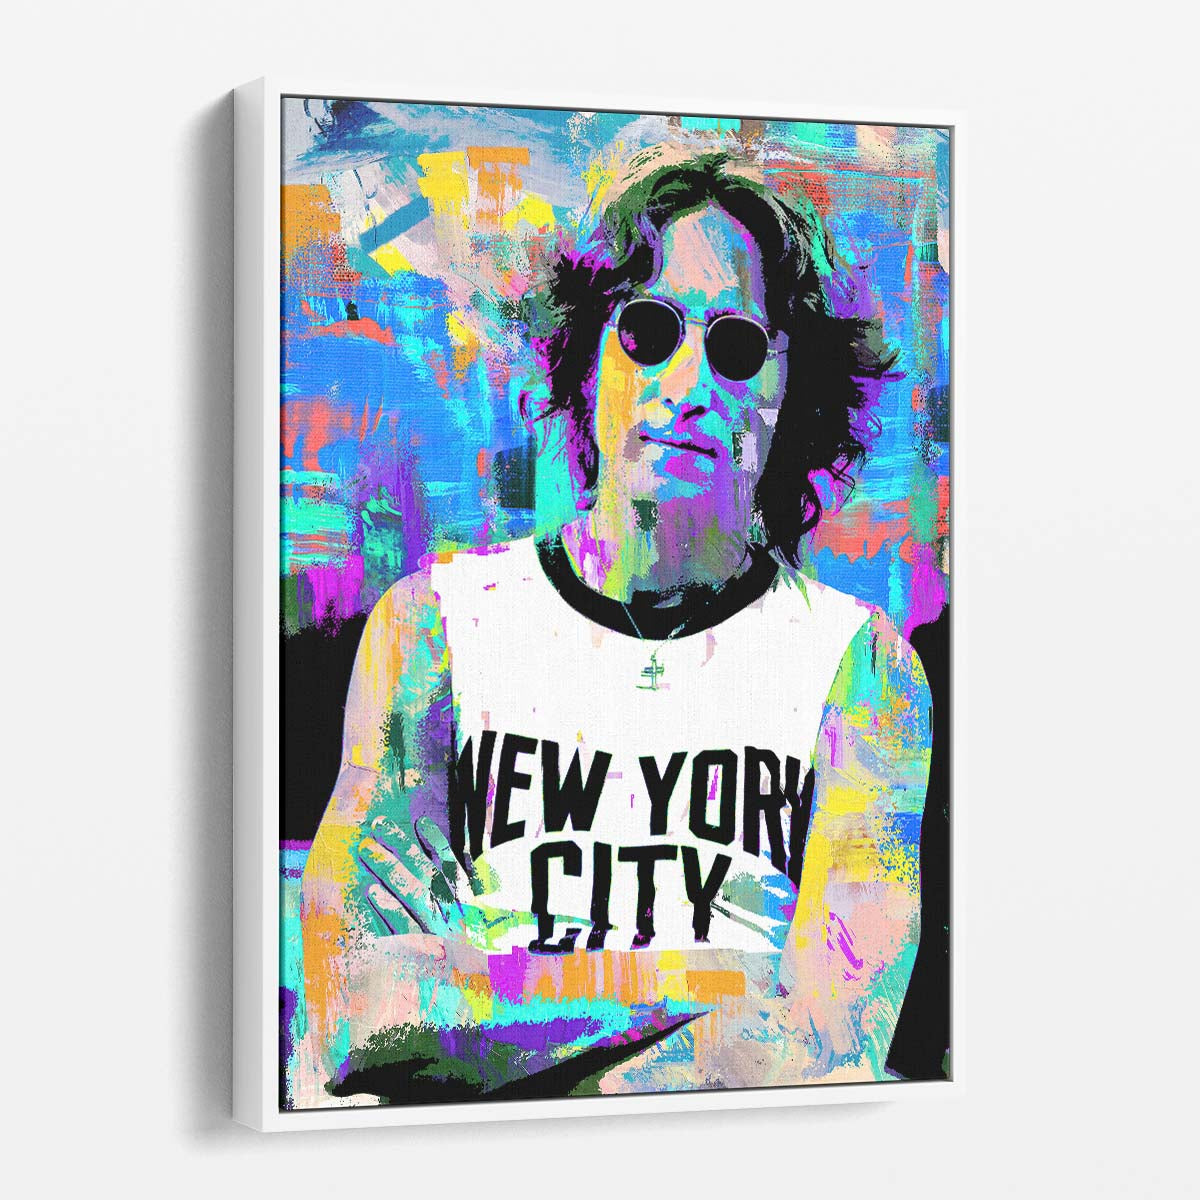 John Lennon NYC Portrait Graffiti Wall Art by Luxuriance Designs. Made in USA.